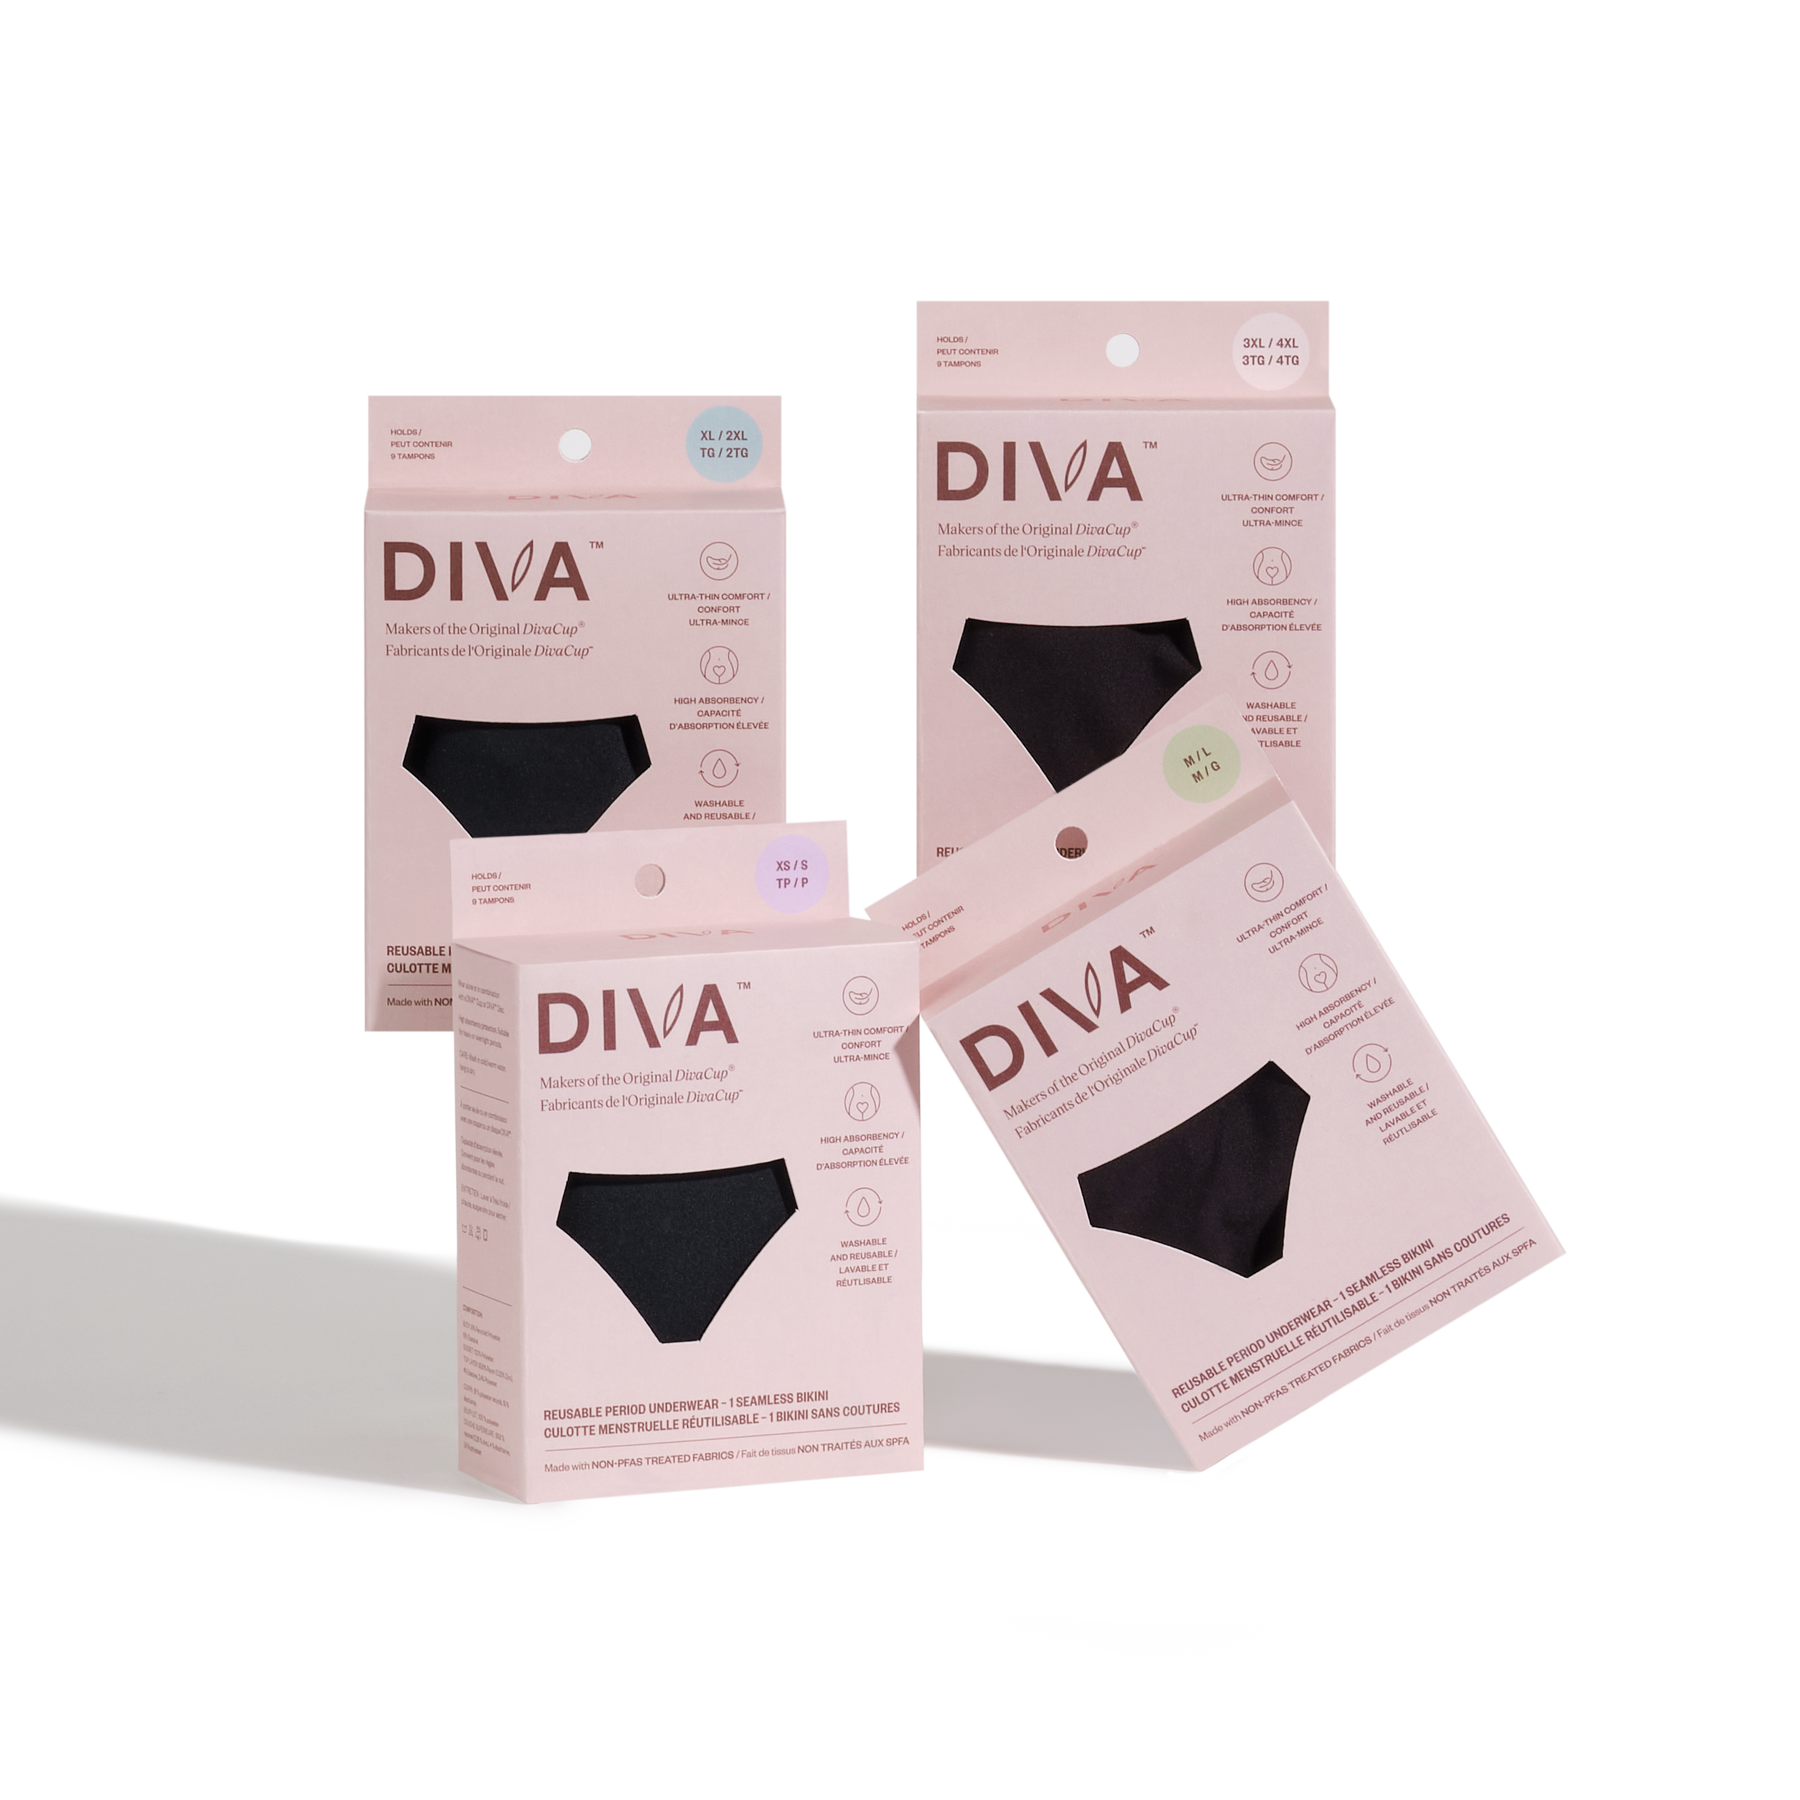 4 Period Underwear Pack  DIVA Reusable Period Underwear – DIVA Canada